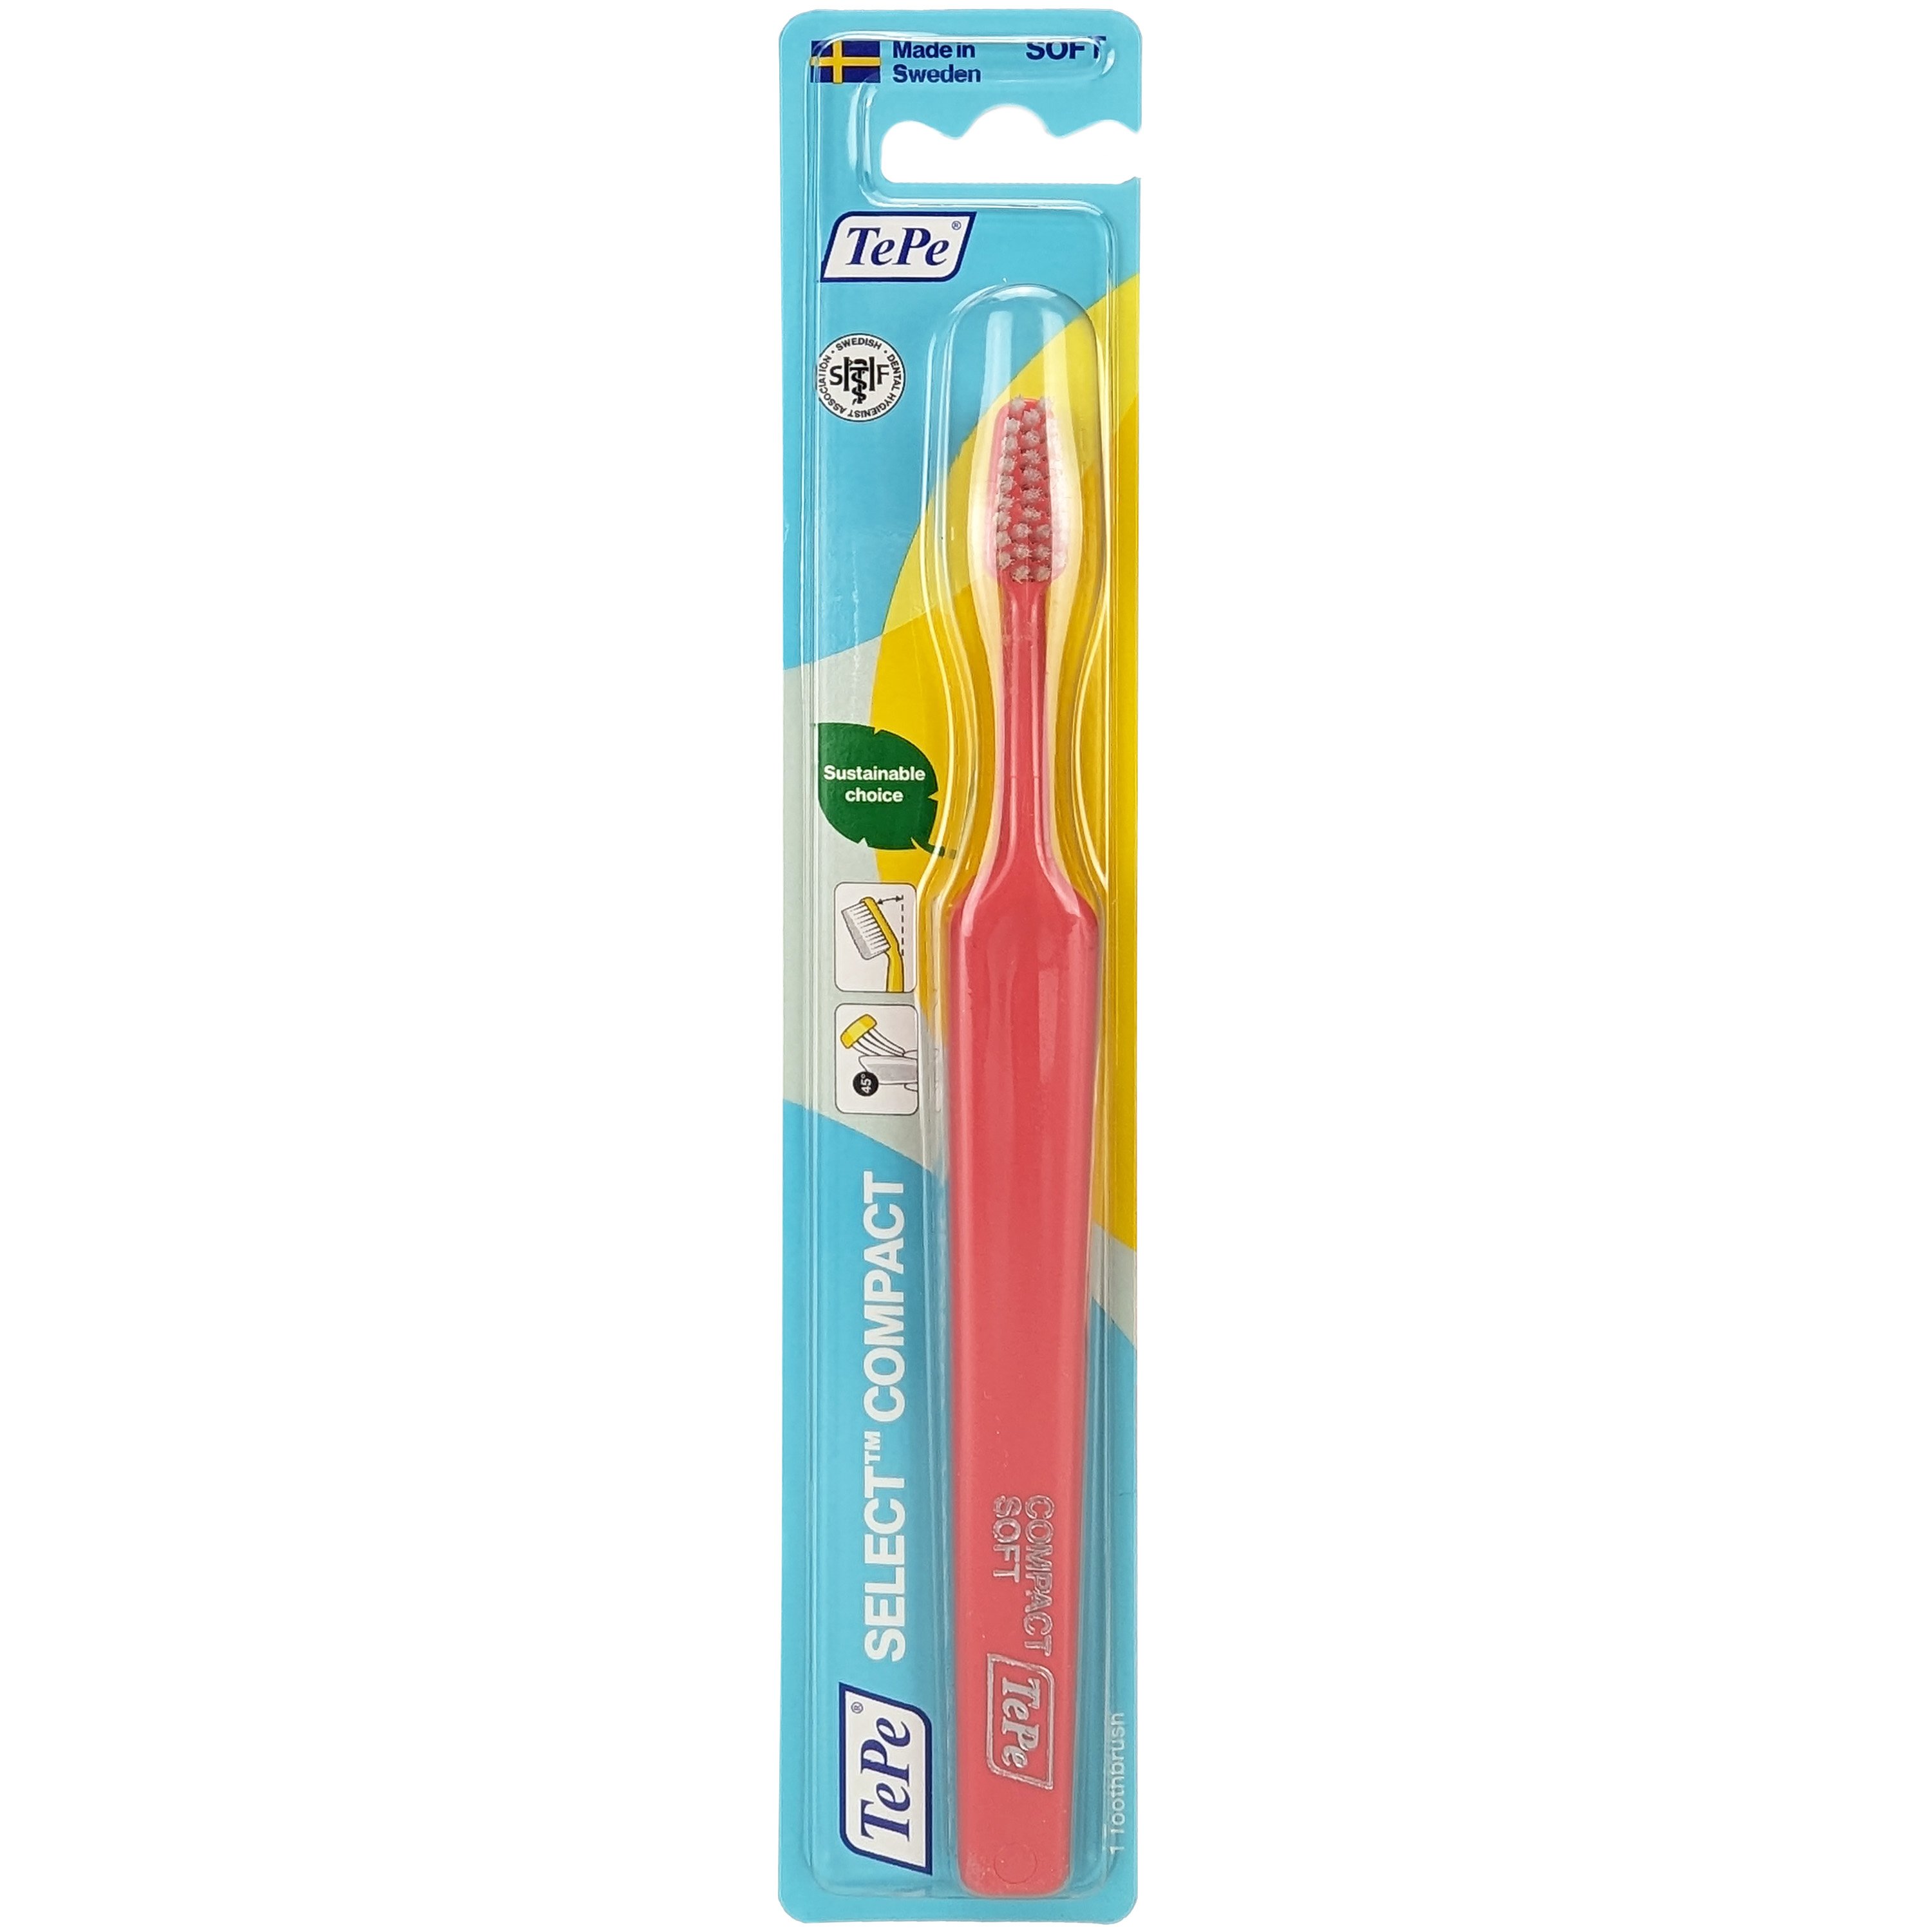 TePe Select Compact Soft Toothbrush Μαλακή Οδοντόβουρτσα με Μικρή Κεφαλή για Αποτελεσματικό Καθαρισμό 1 Τεμάχιο – Κόκκινο